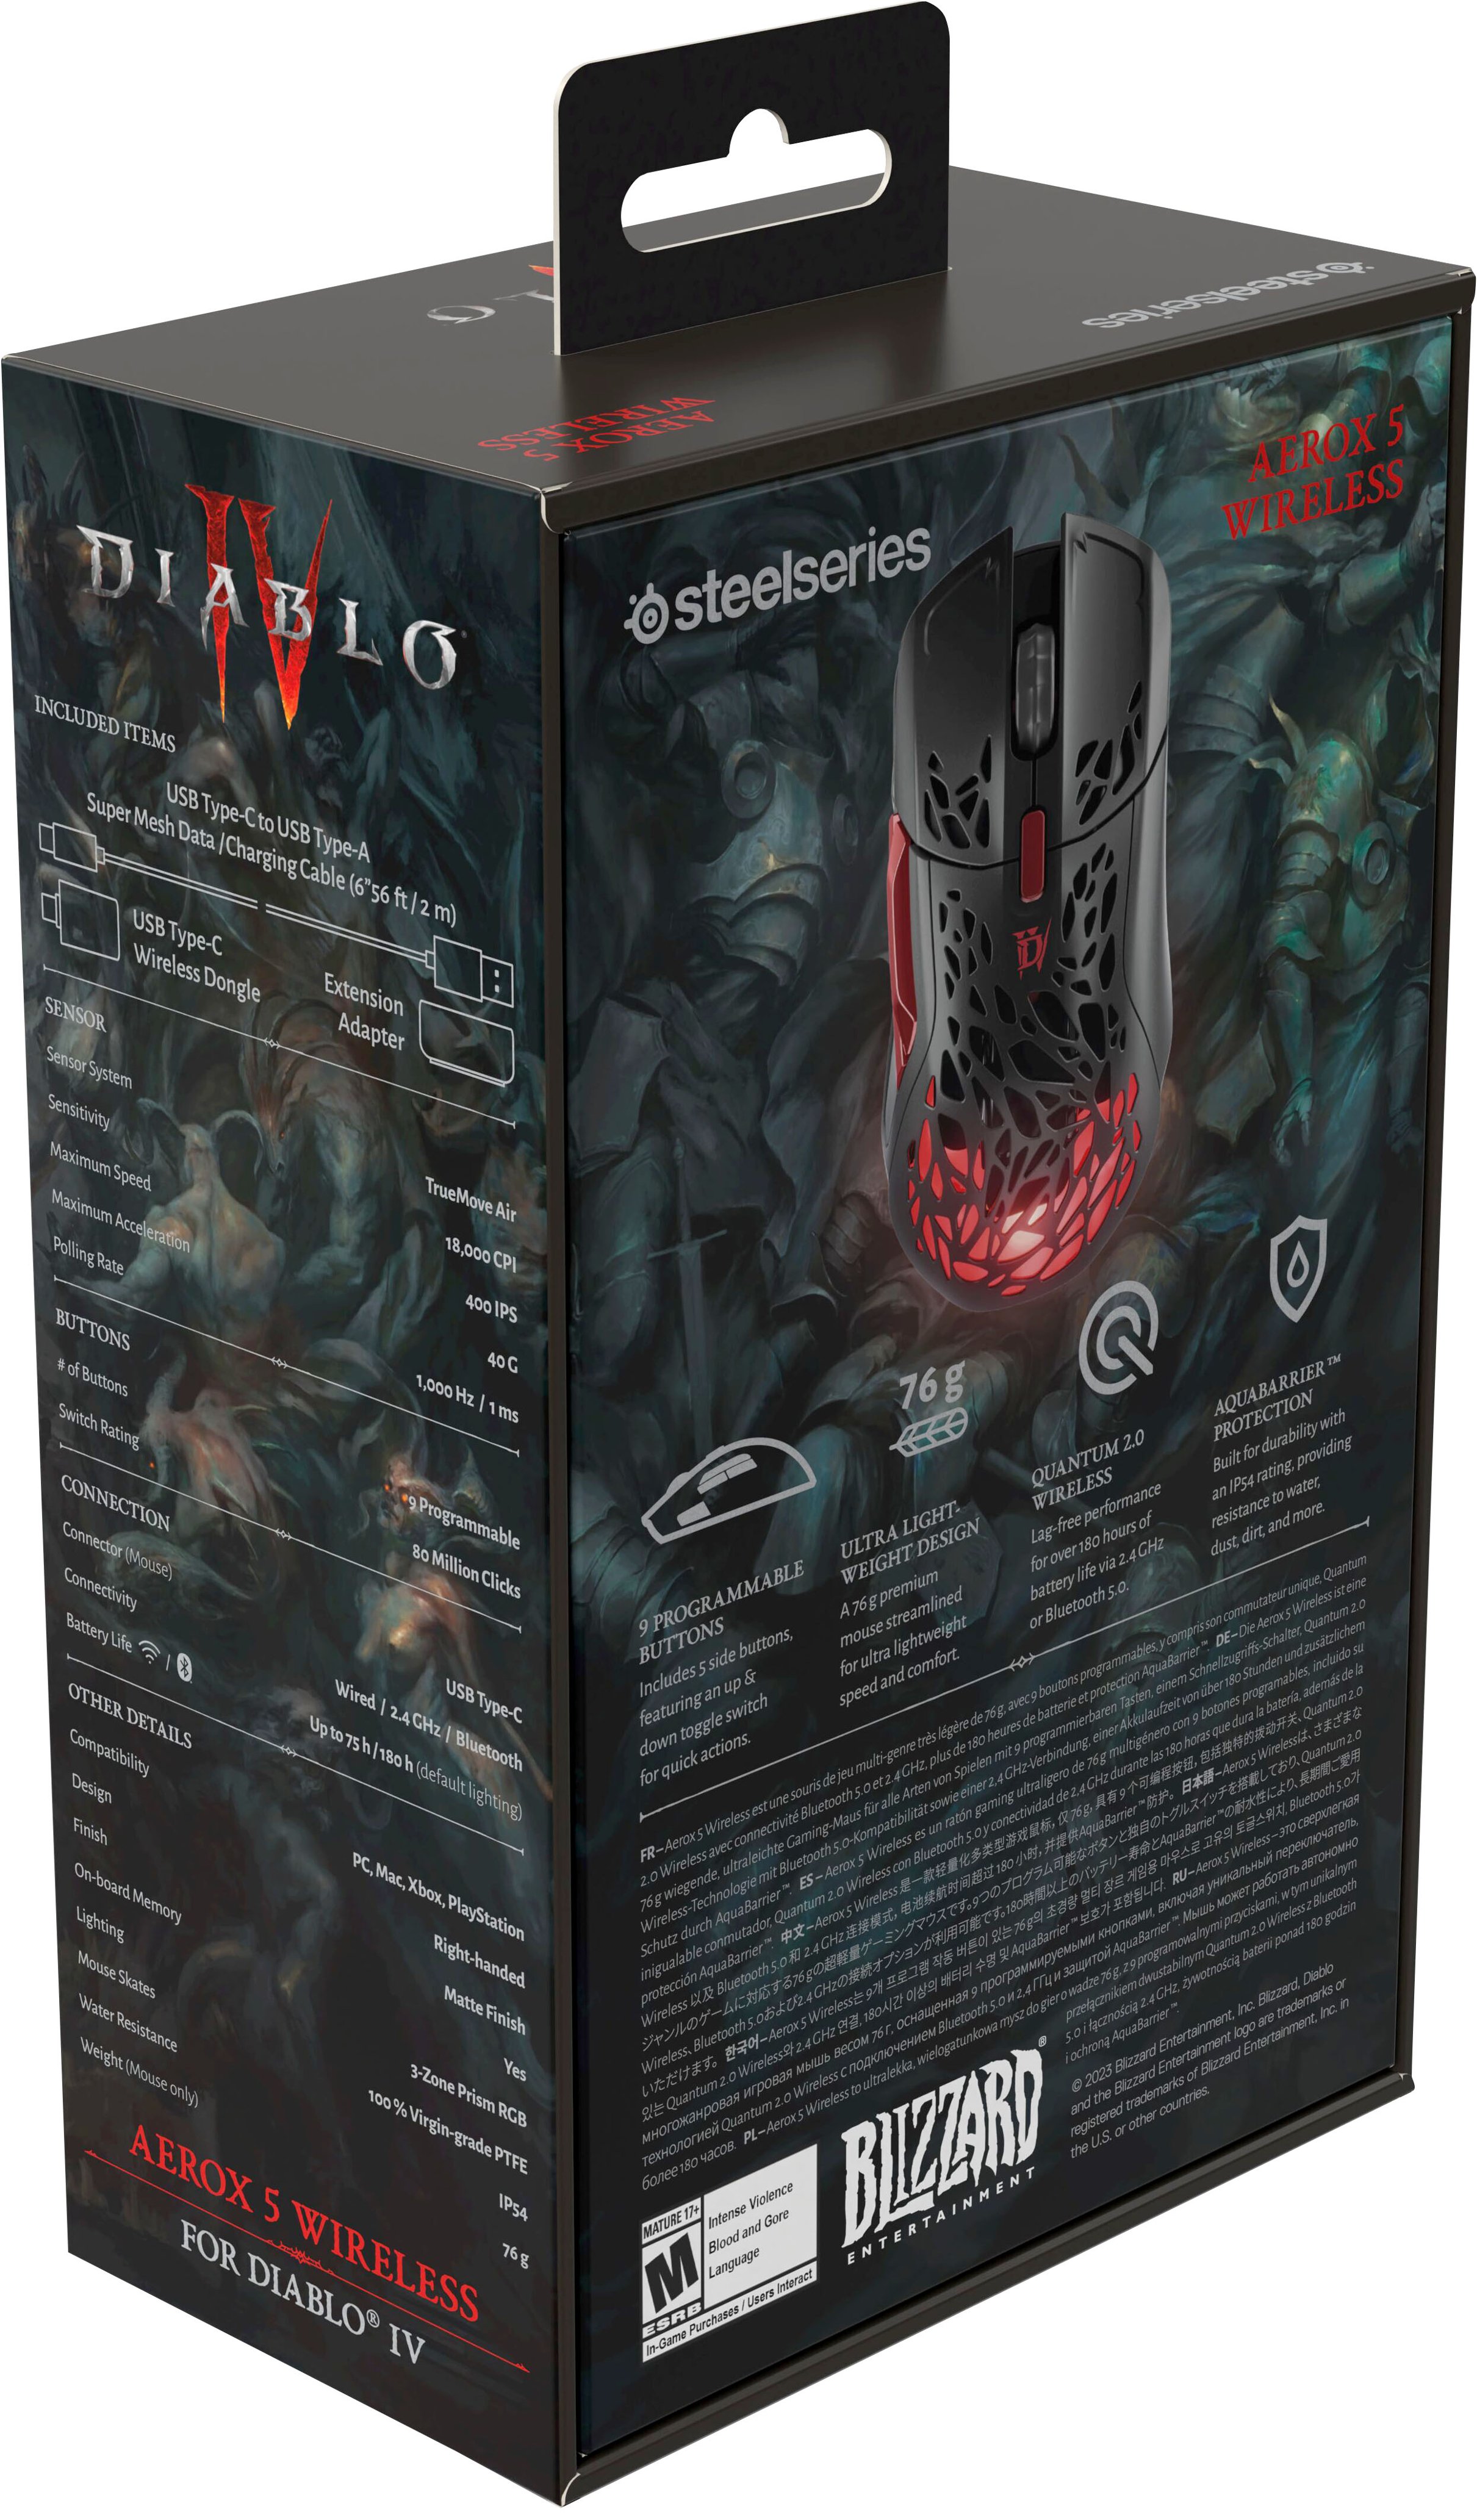  SteelSeries Aerox 5 Wireless – Diablo IV Edition